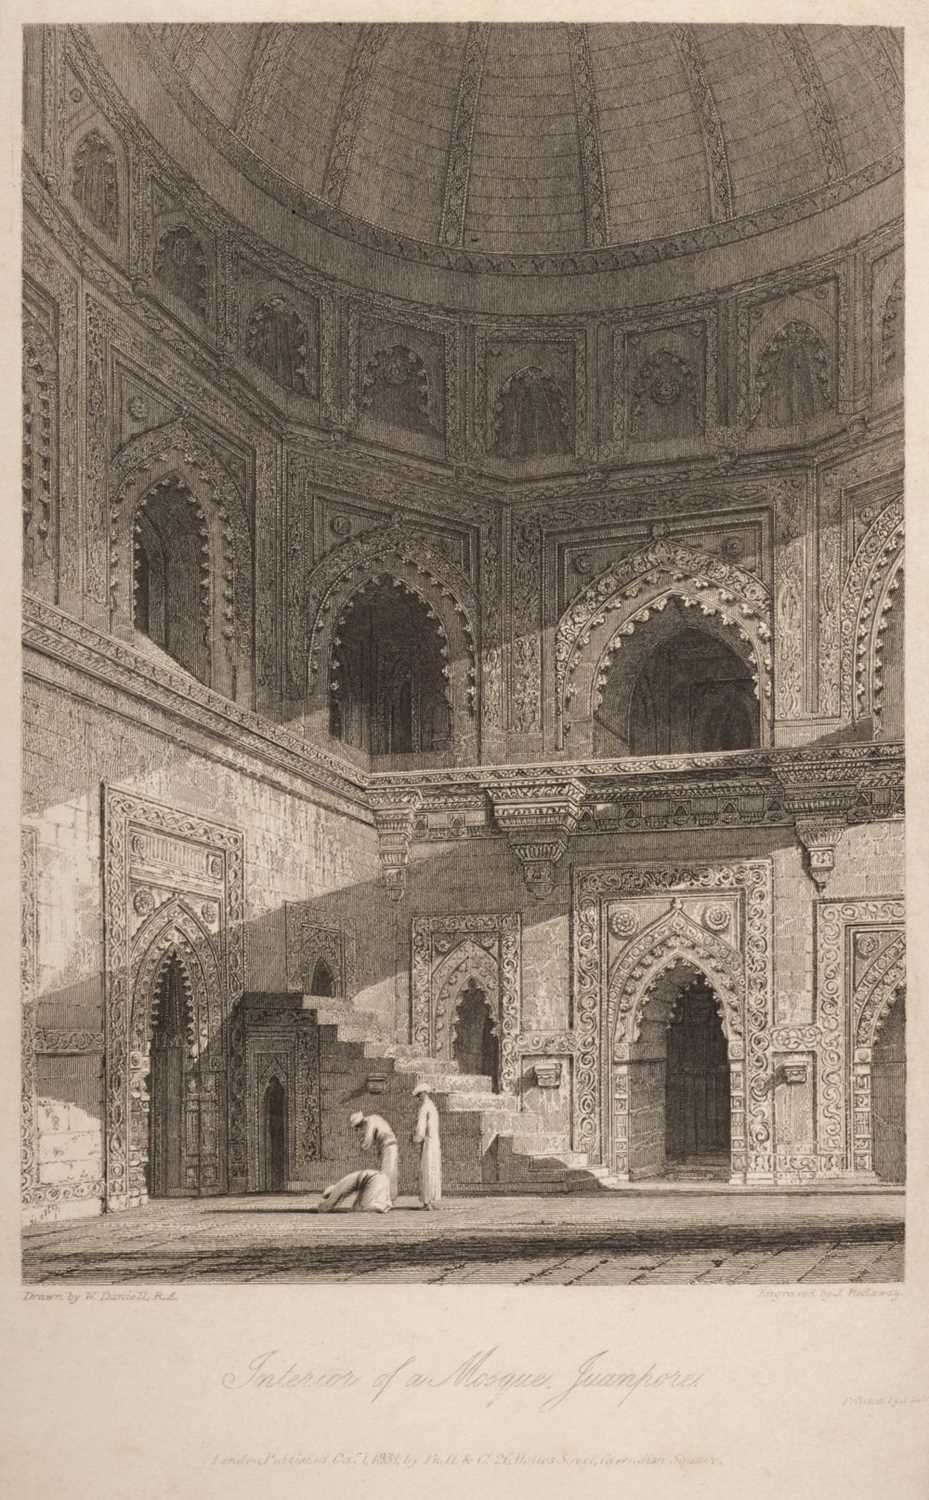 Lot 5 - Daniell (William). The Oriental Annual, or Scenes in India, London: Bull and Churton, 1835